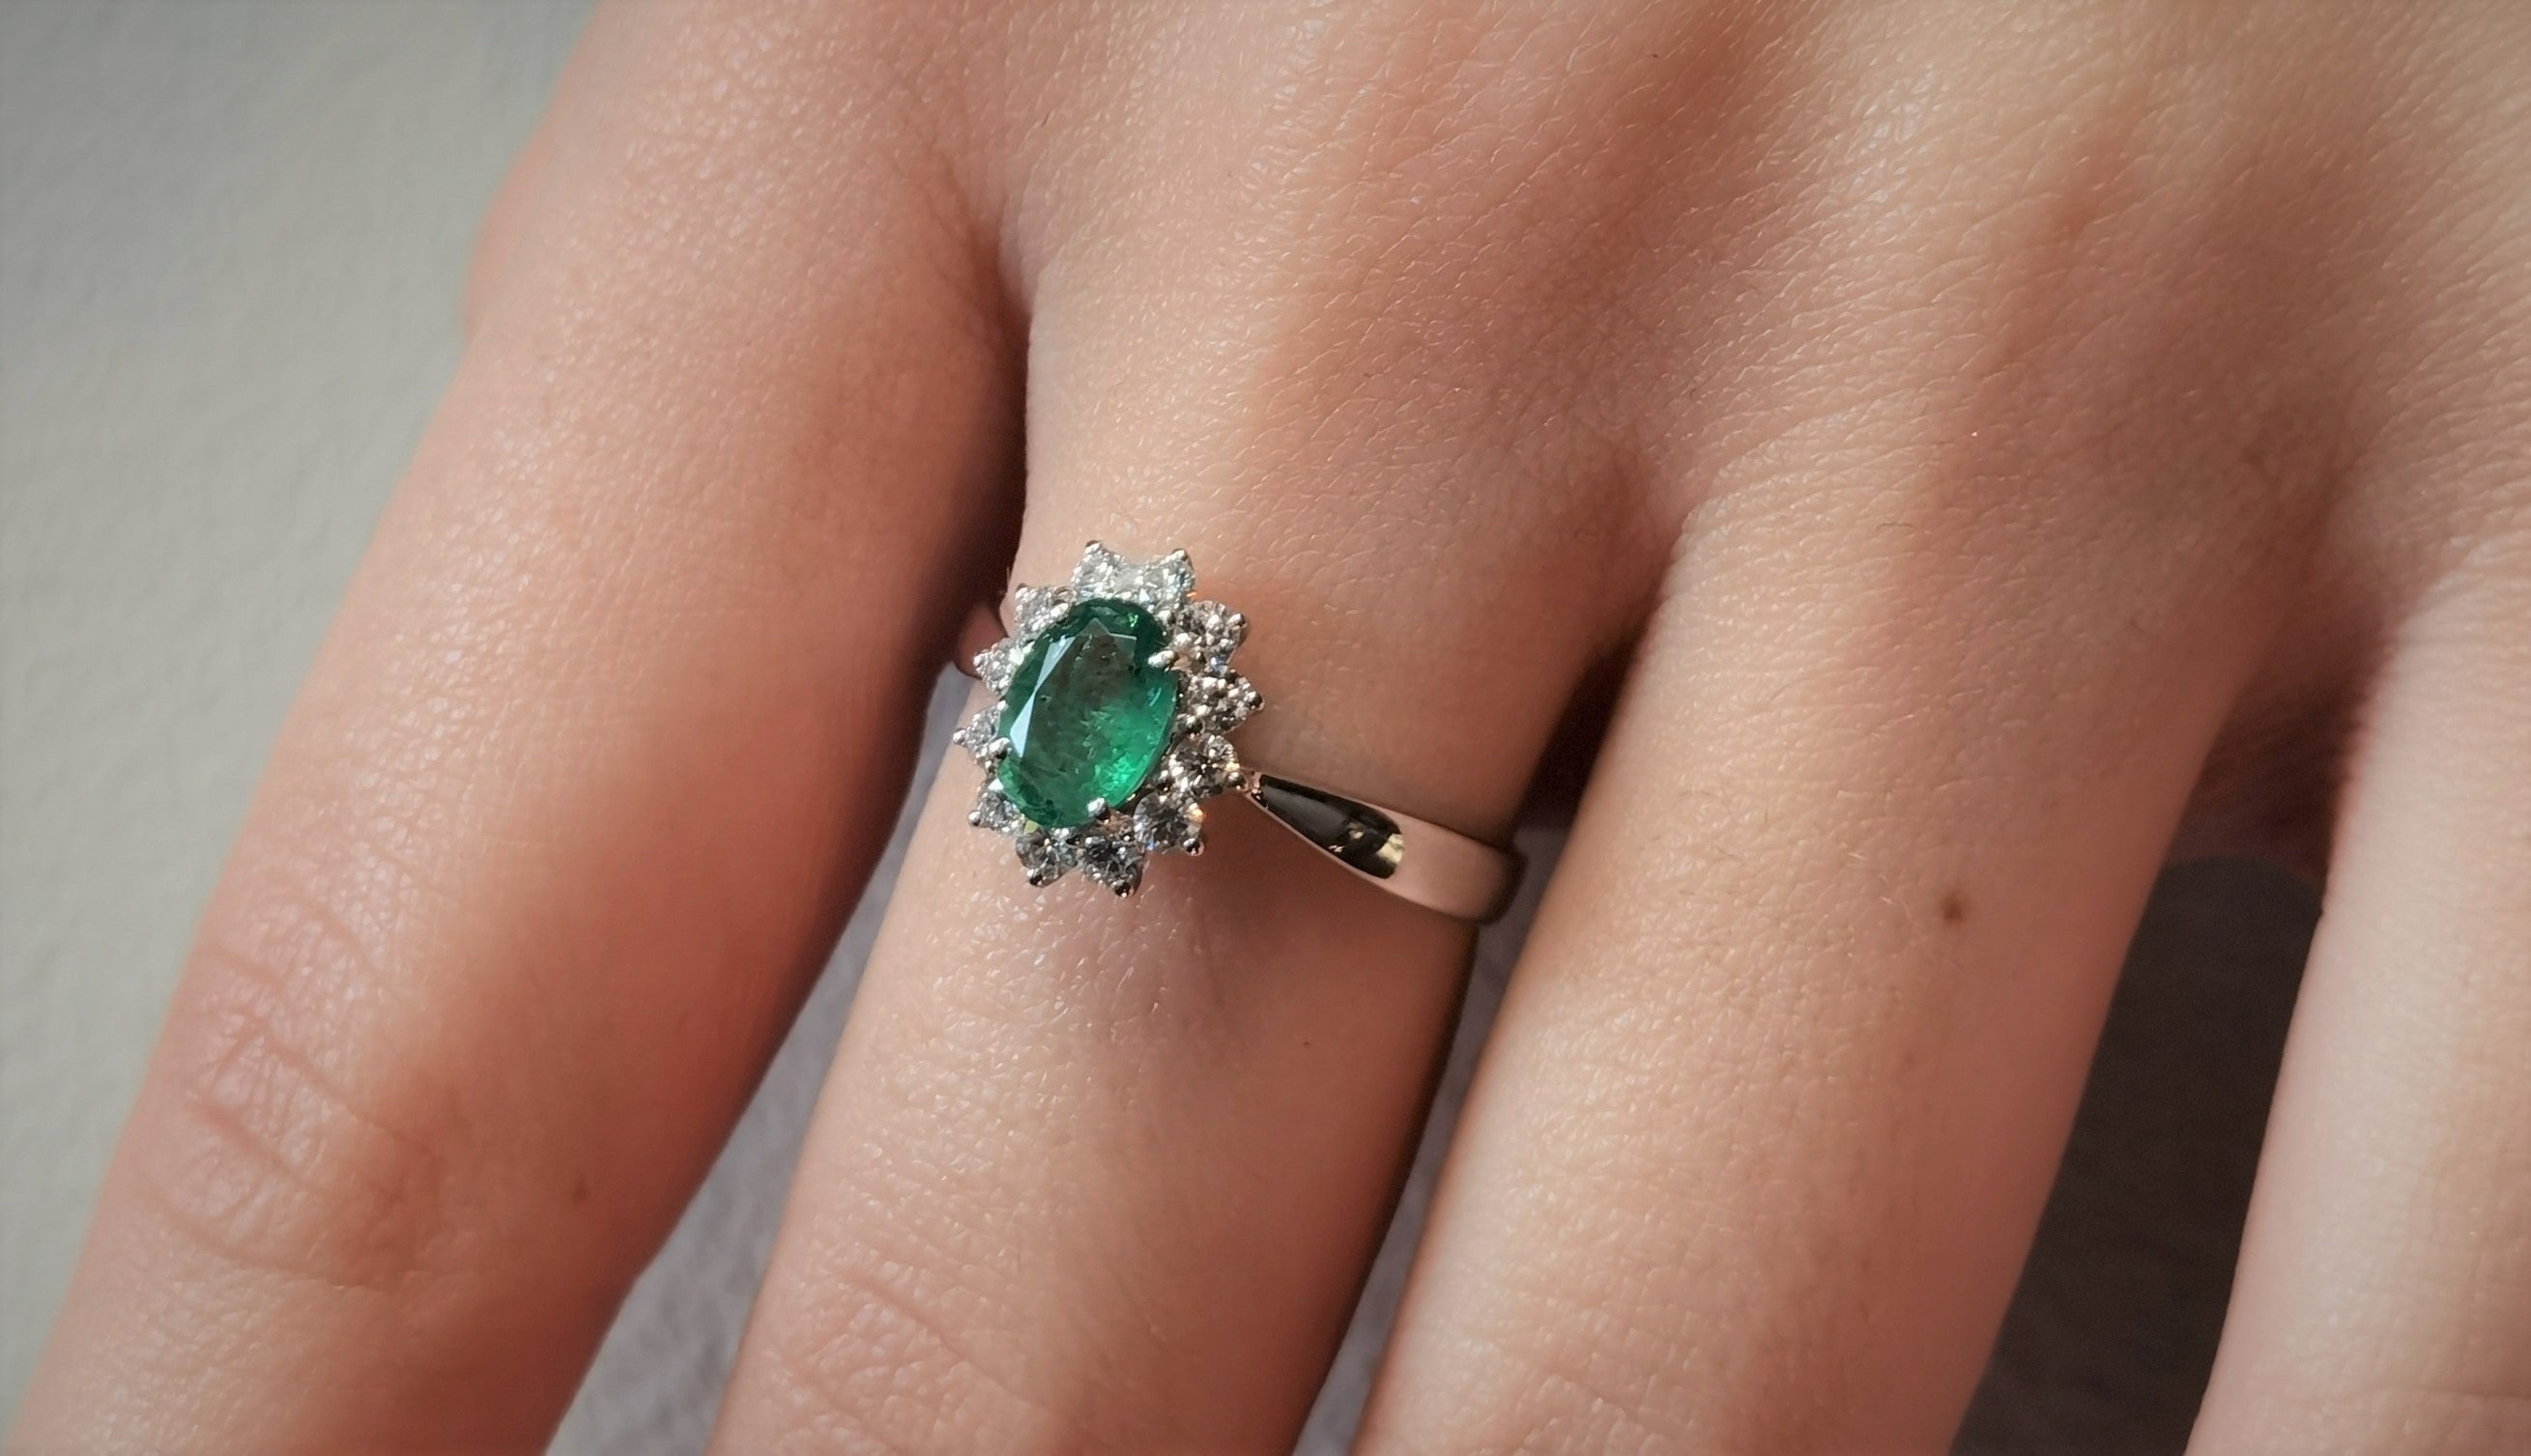 Hiraani ring with emerald and diamonds